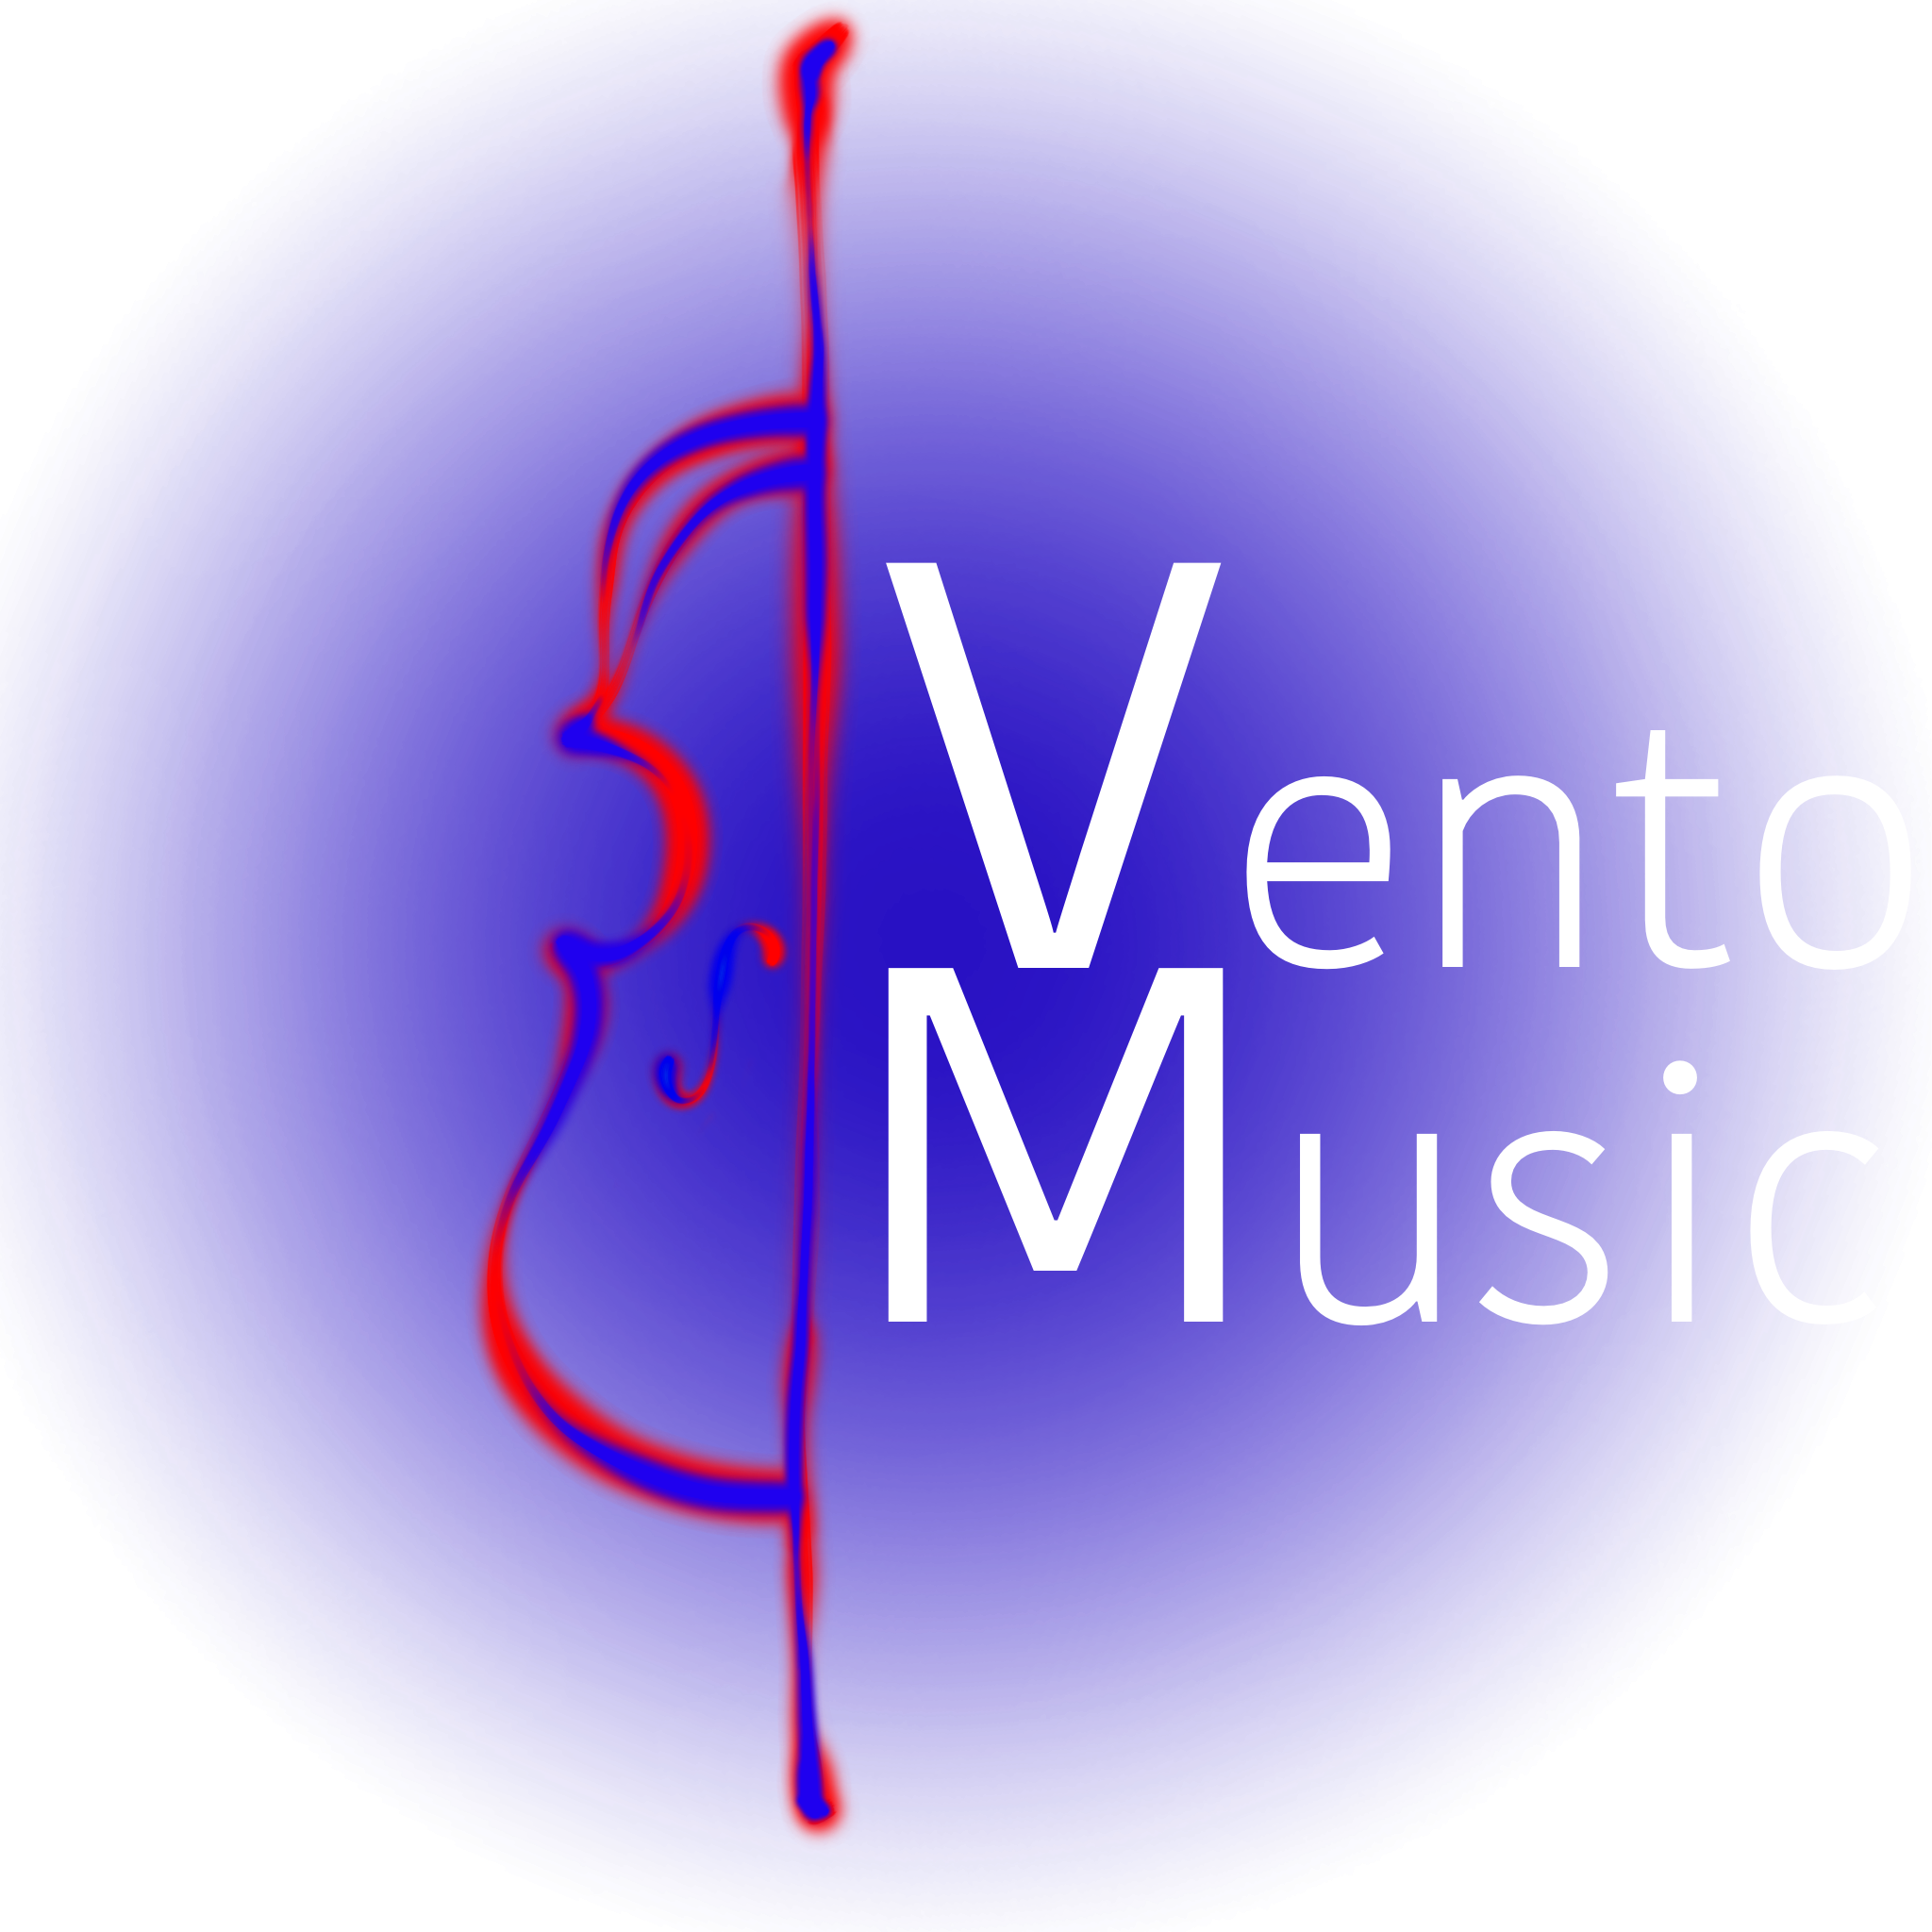 Vento music